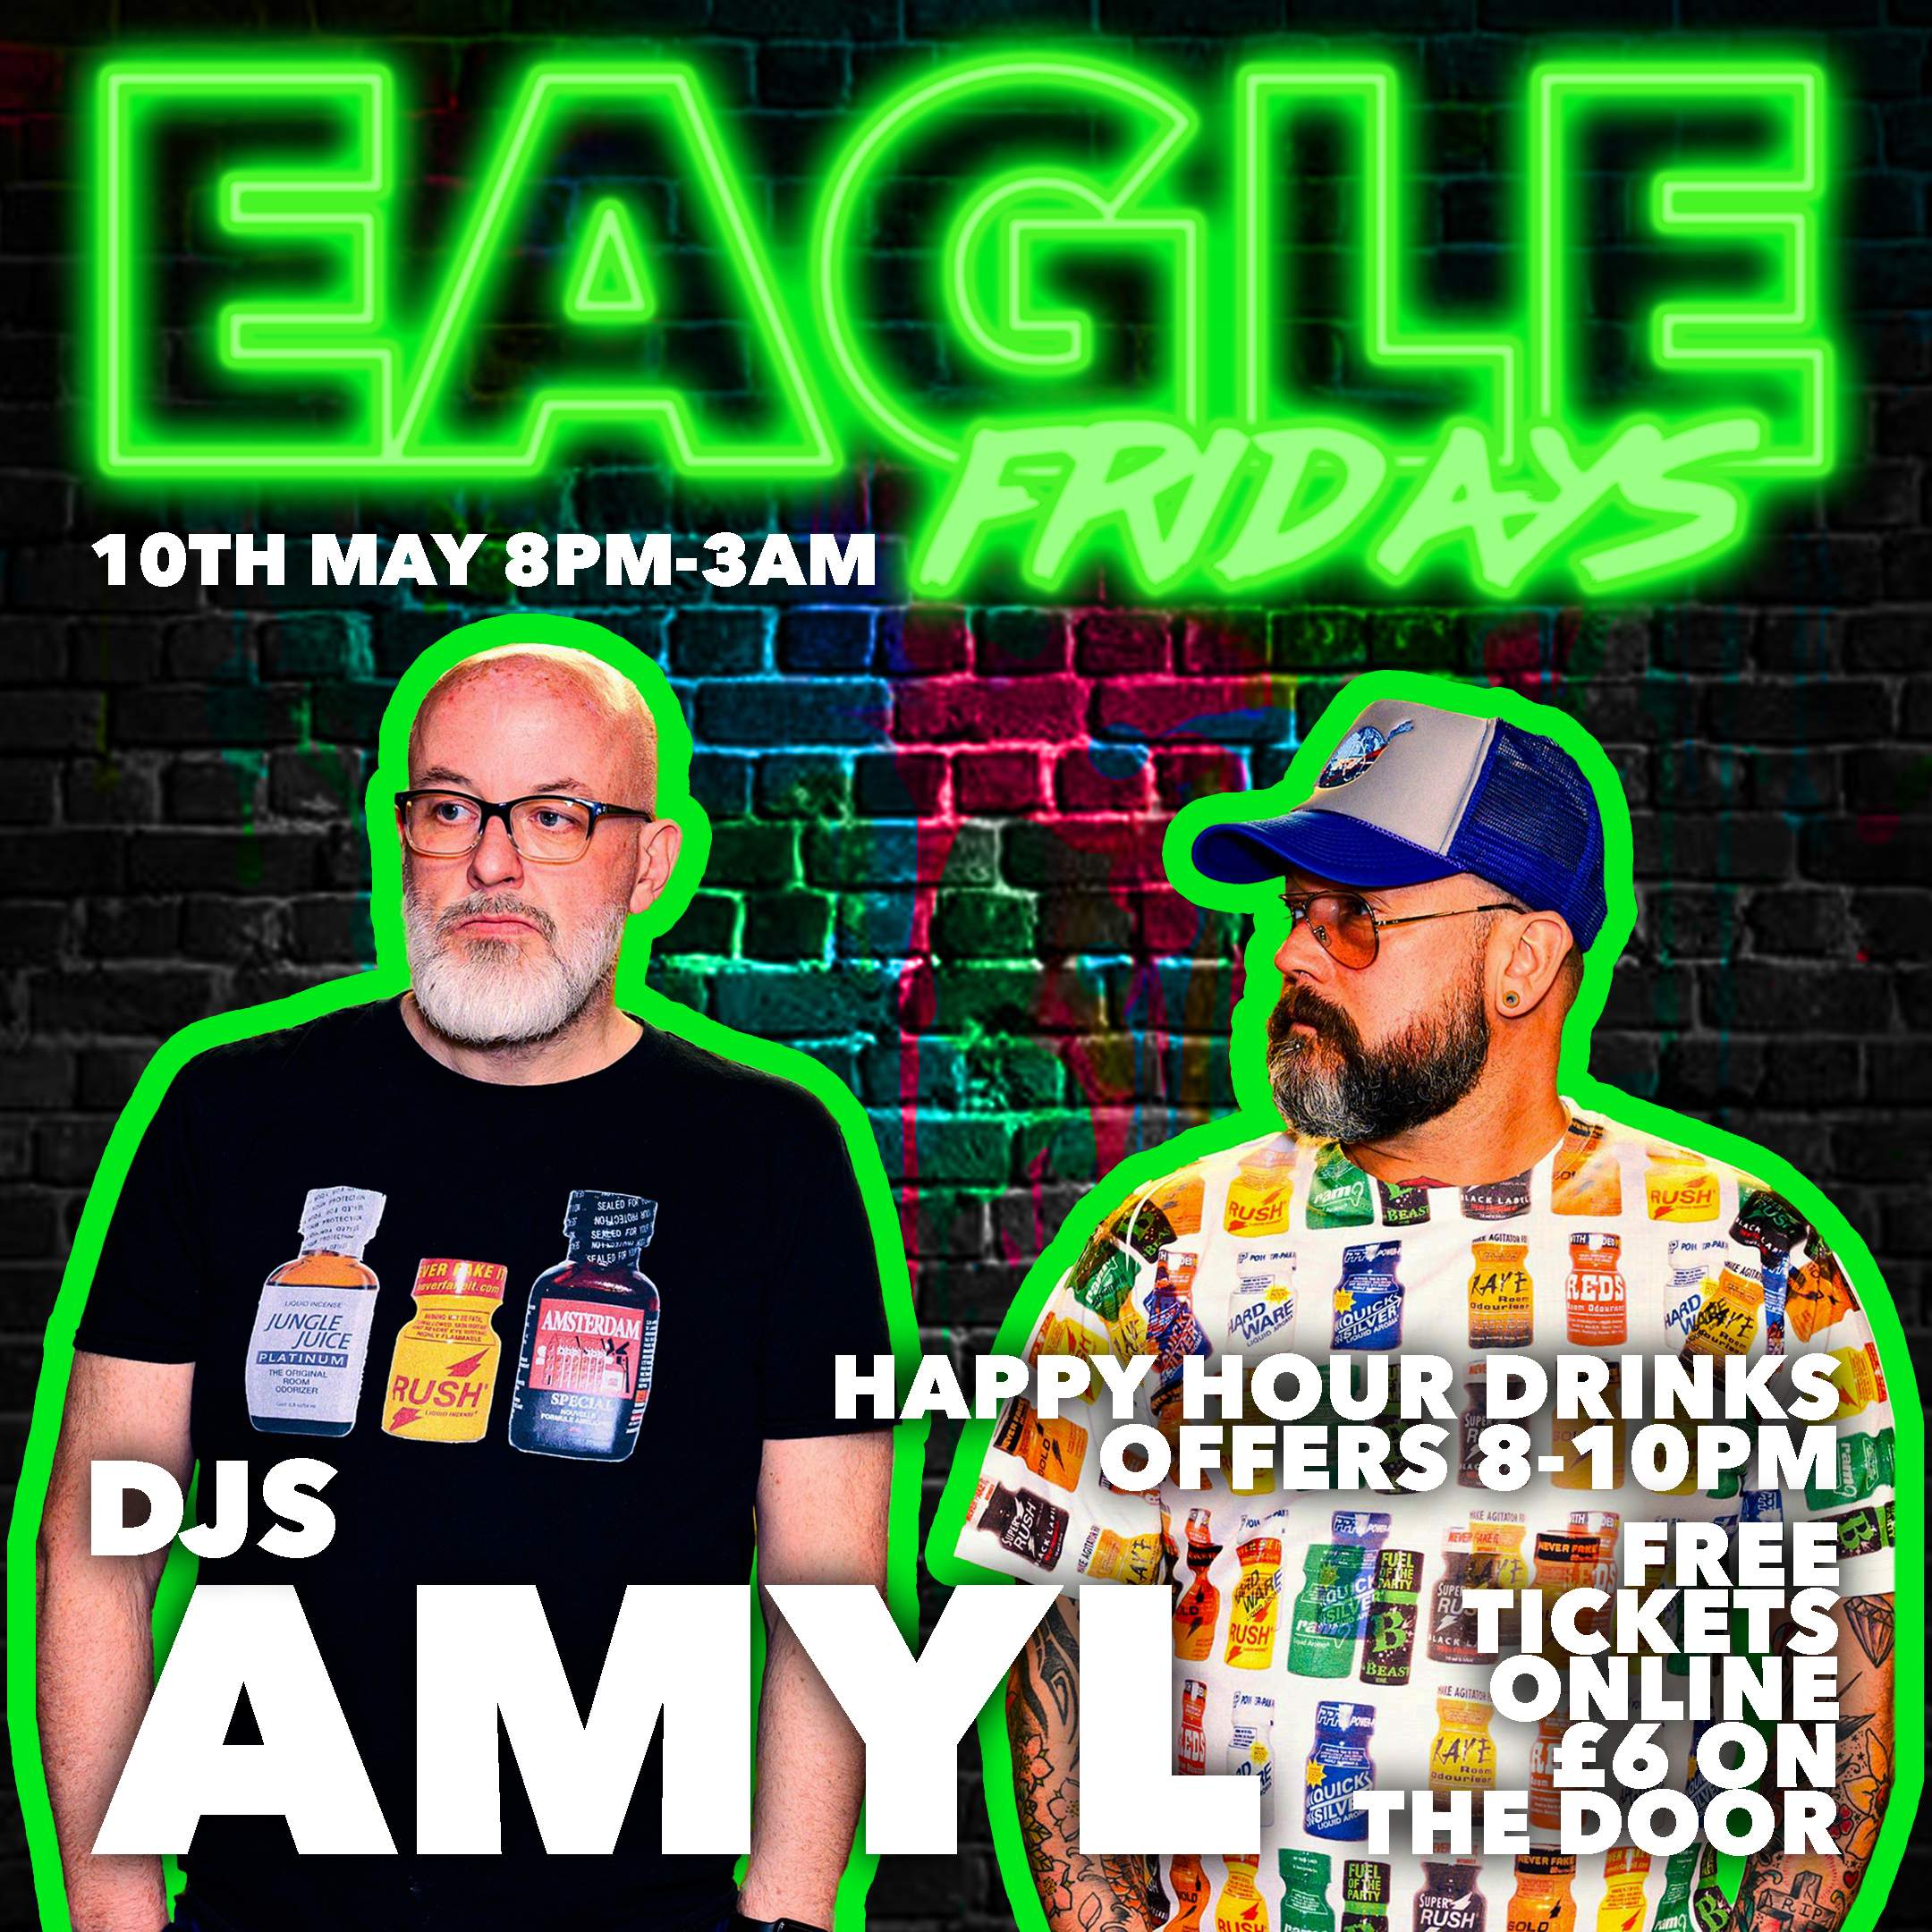 Eagle Fridays with DJs AMYL - フライヤー表